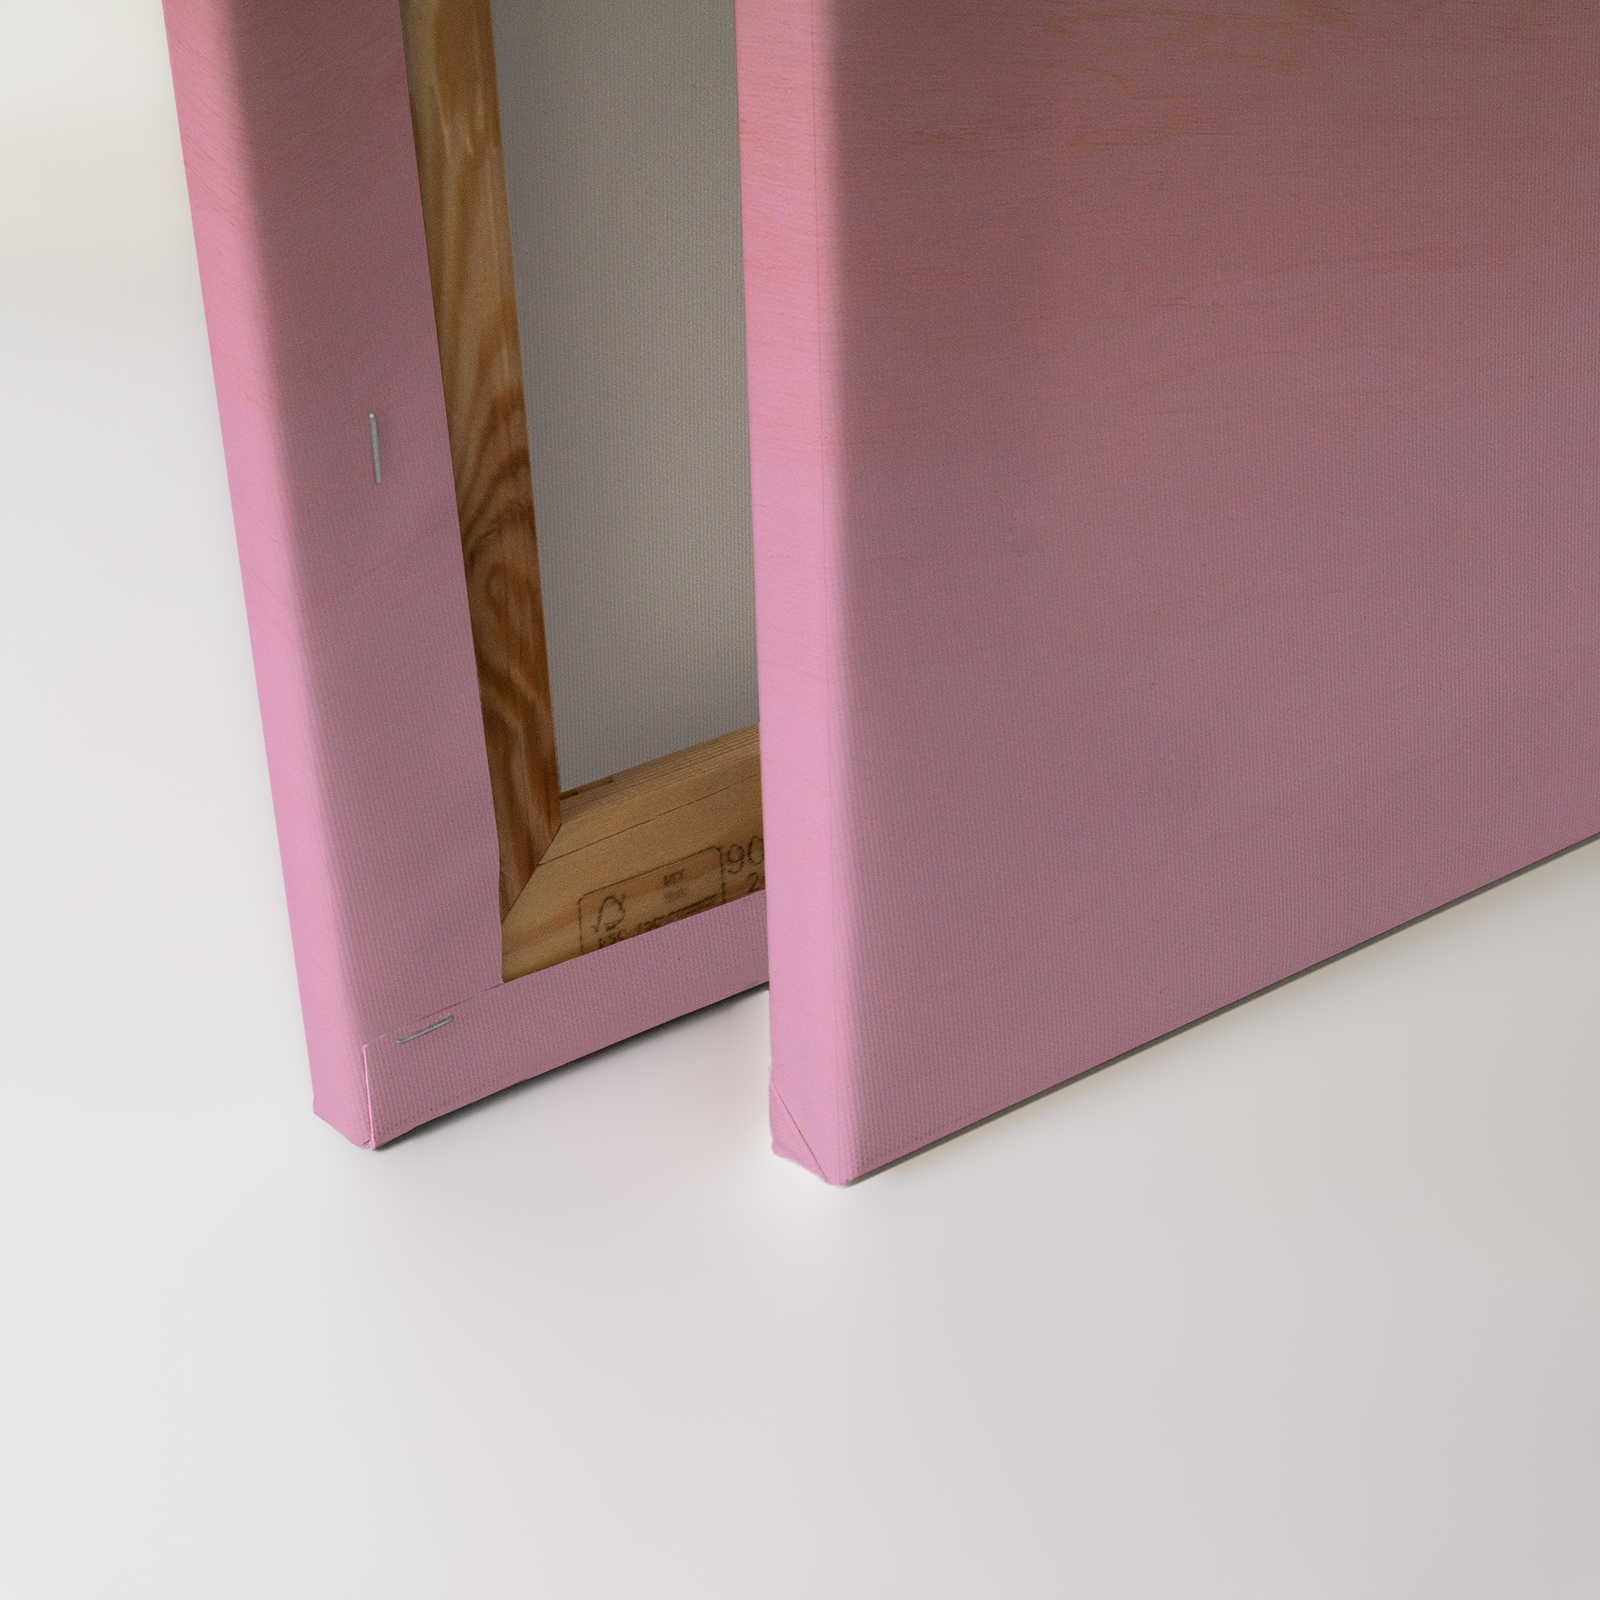             Workshop 1 - Canvas painting Pink Ombre Effect & Wood Grain - 1.20 m x 0.80 m
        